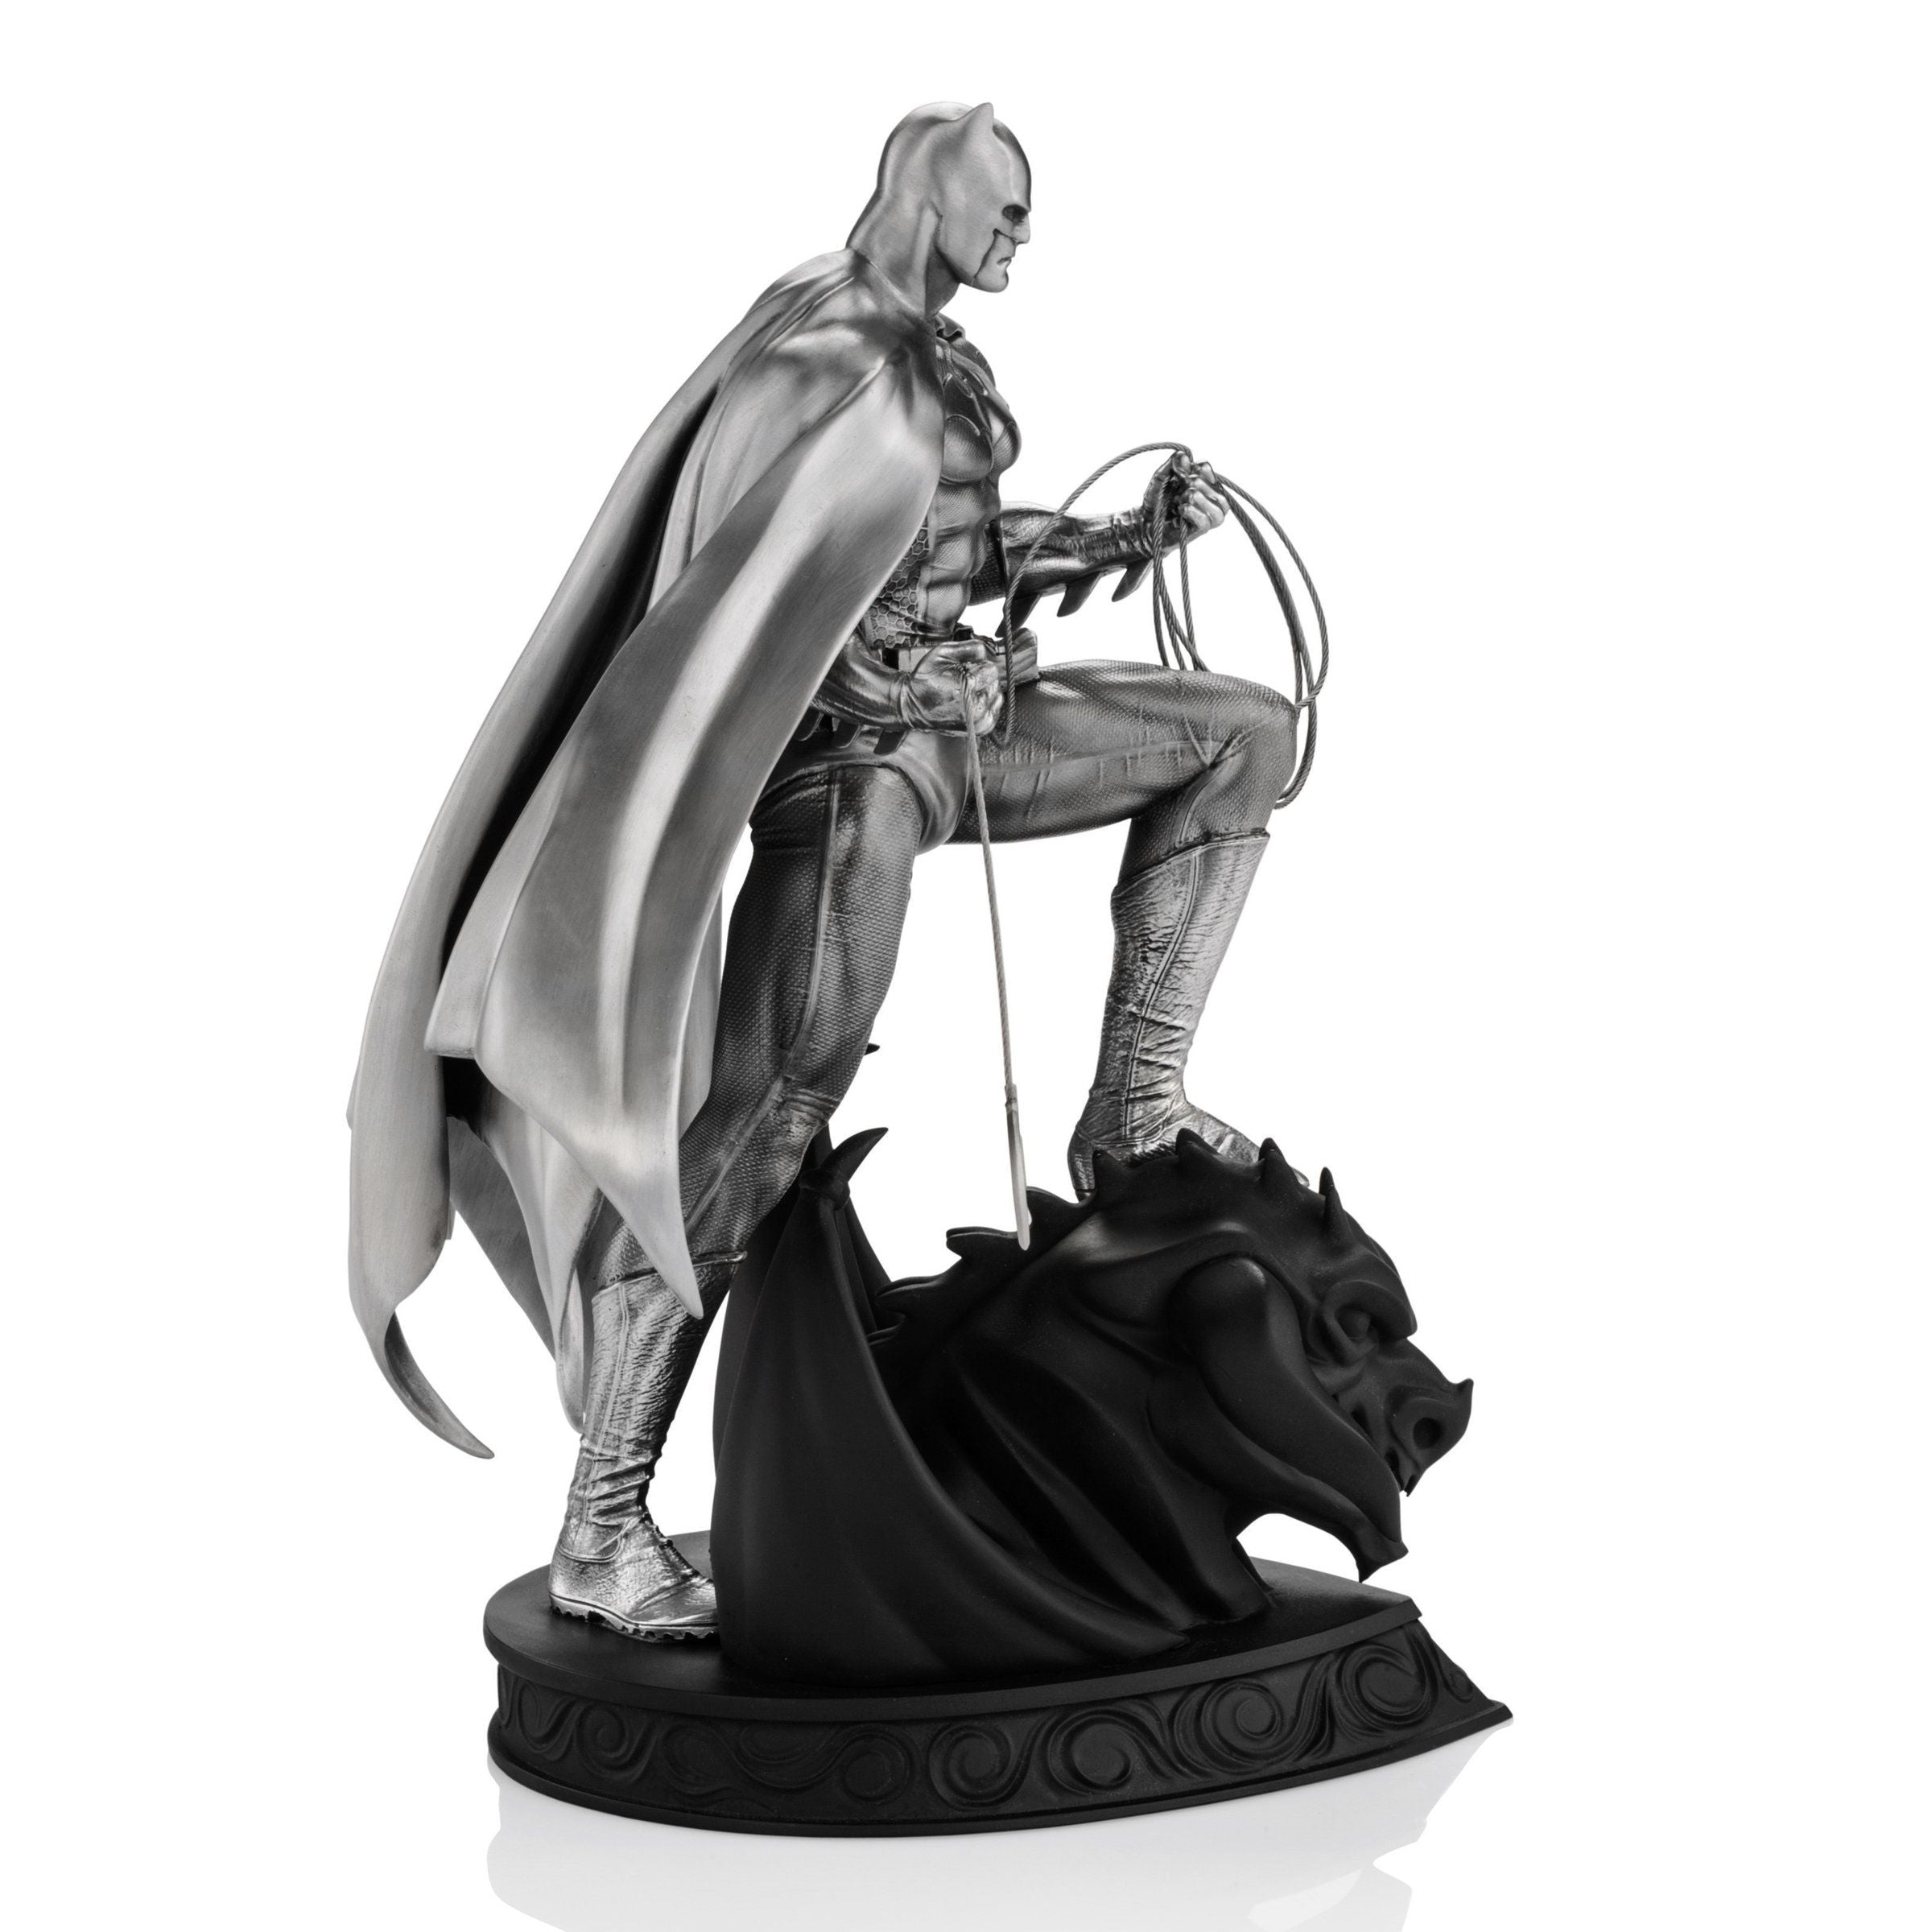 Limited Edition Batman Figurine by Royal Selangor